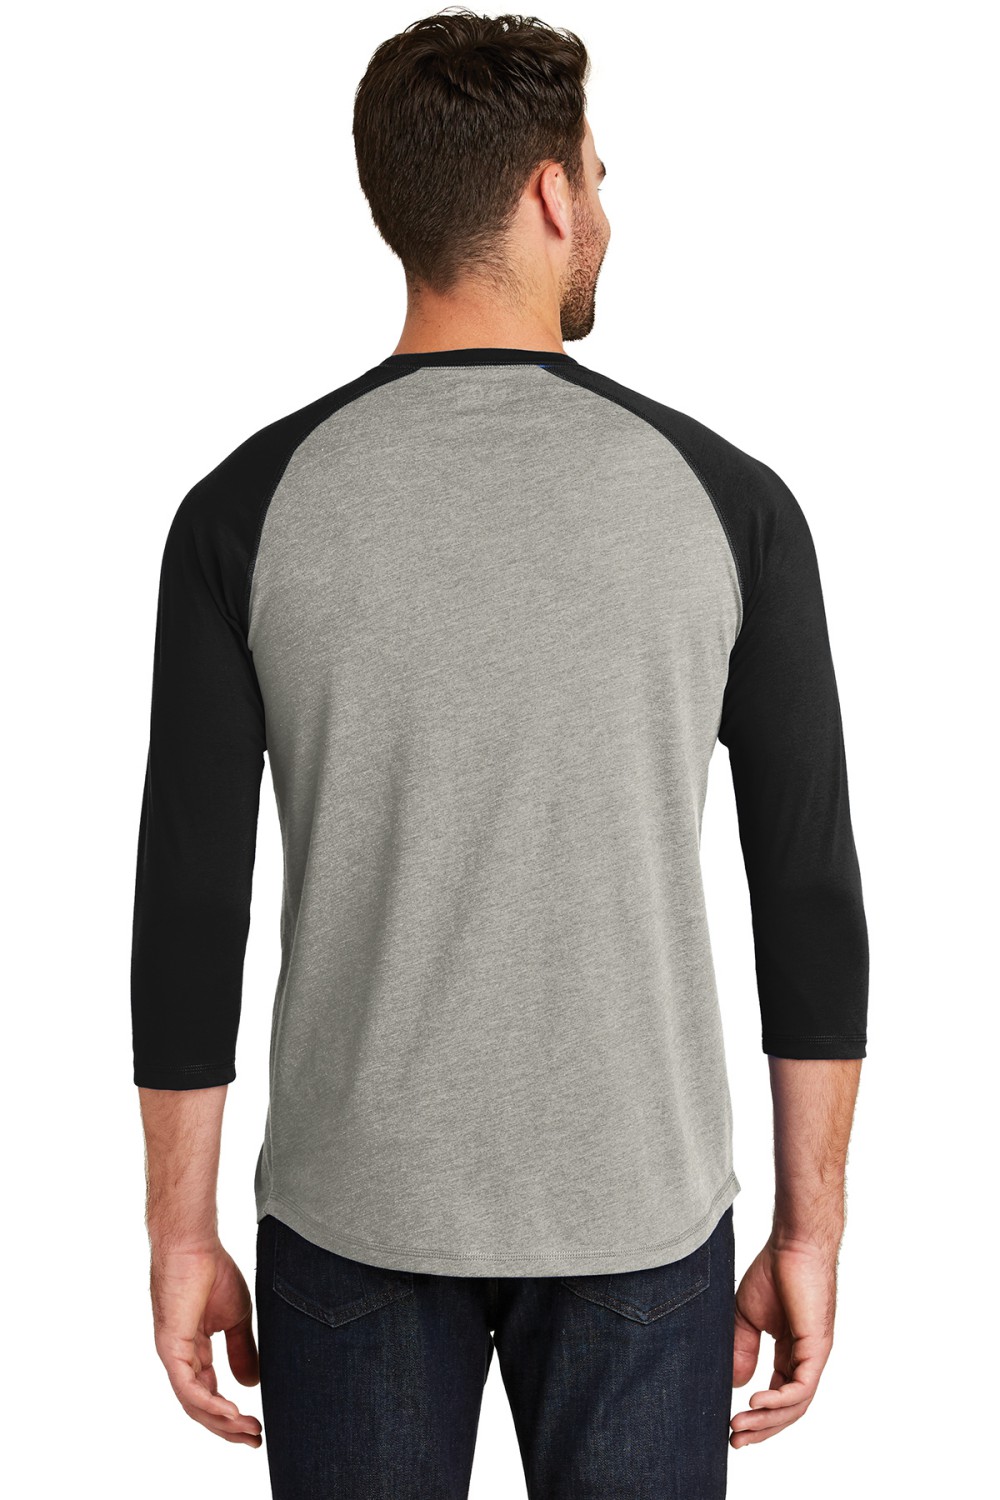 'New Era NEA104 Logo Embroidered Baseball Raglan T-Shirt - For Men'